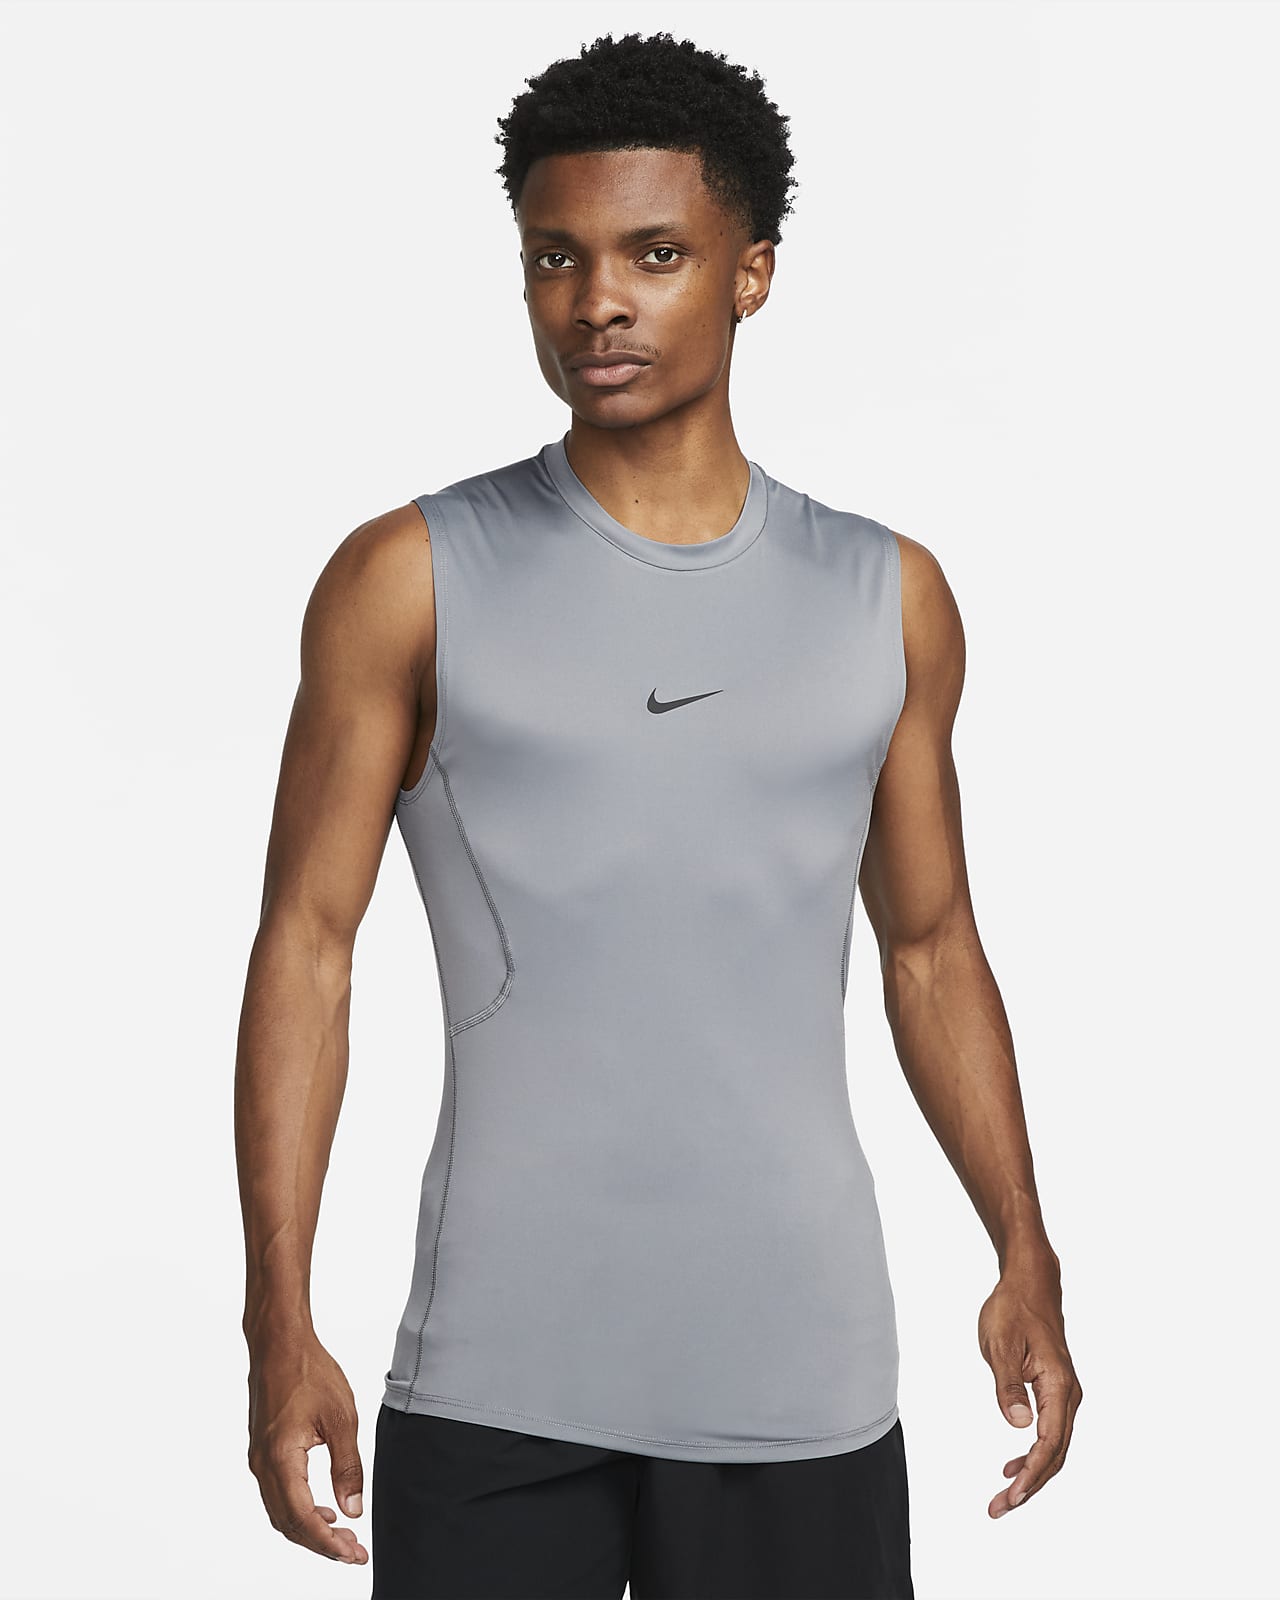 Nike NBA Pro Breathe Compression Shirt - Men's Basketball - Size M - Black